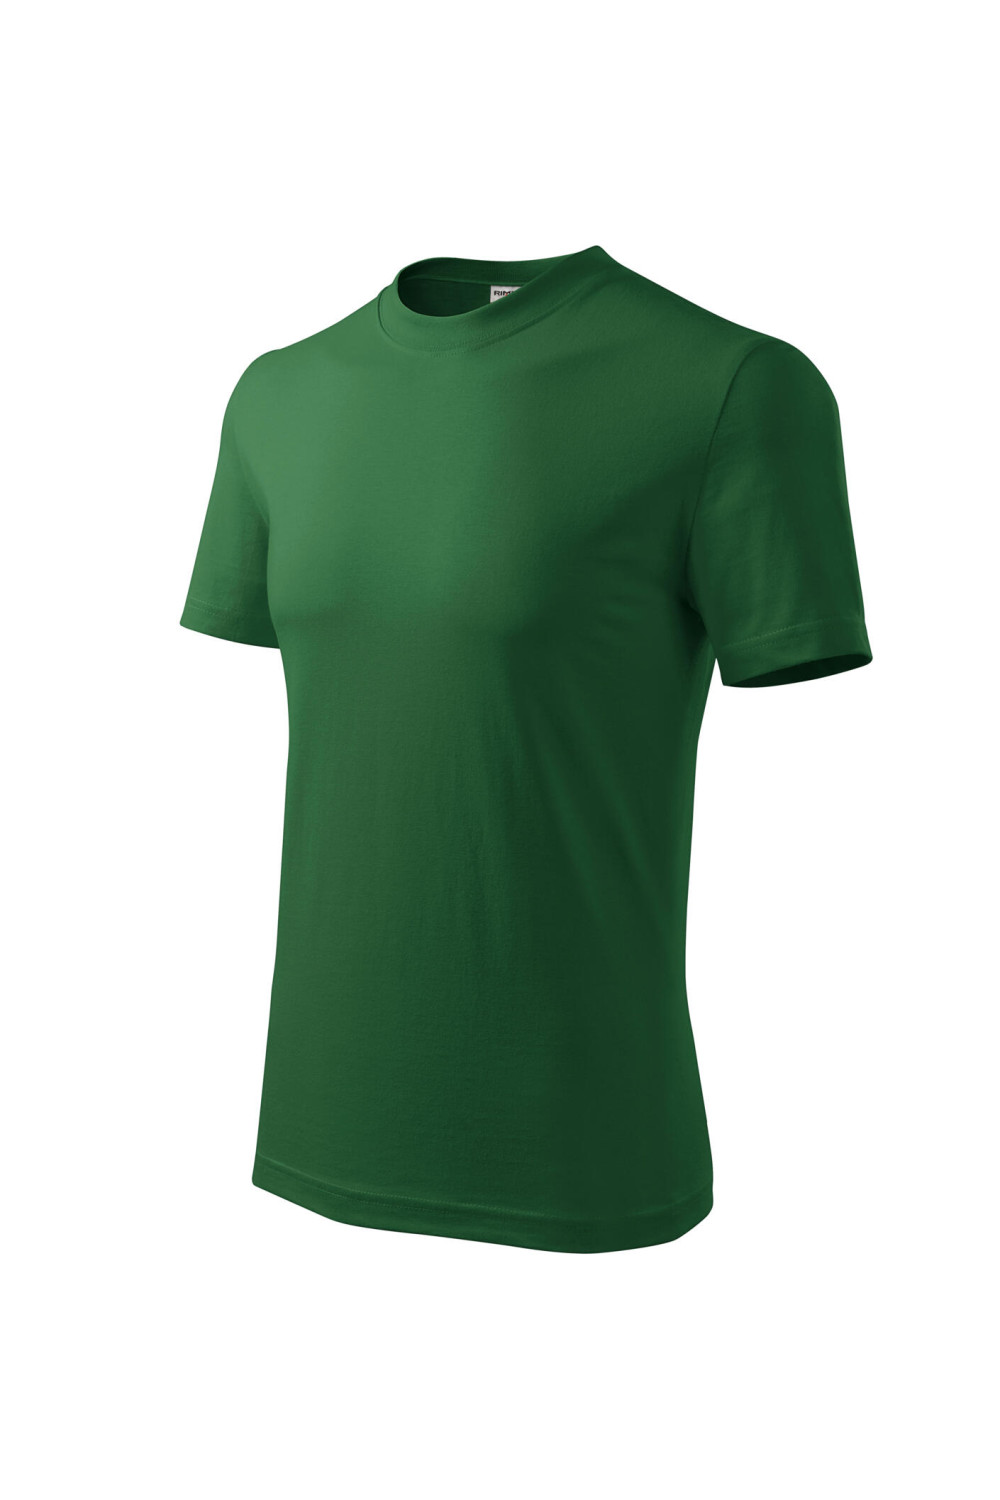 RECALL R07 MALFINI ADLER Koszulka t-shirt unisex zieleń butelkowa